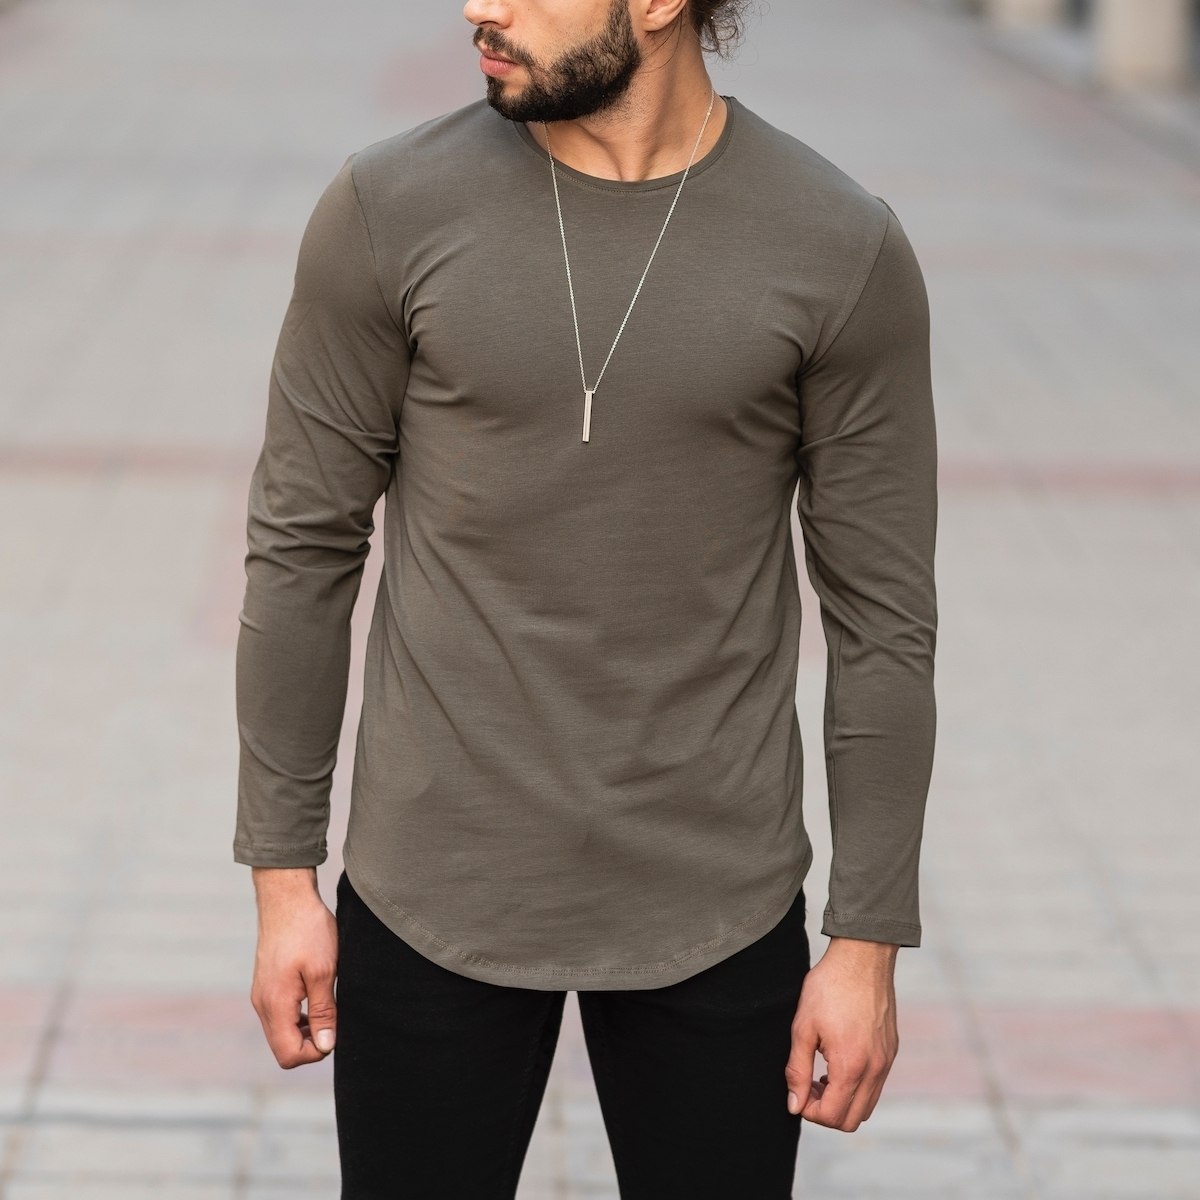 Basic Sweatshirt In Khaki